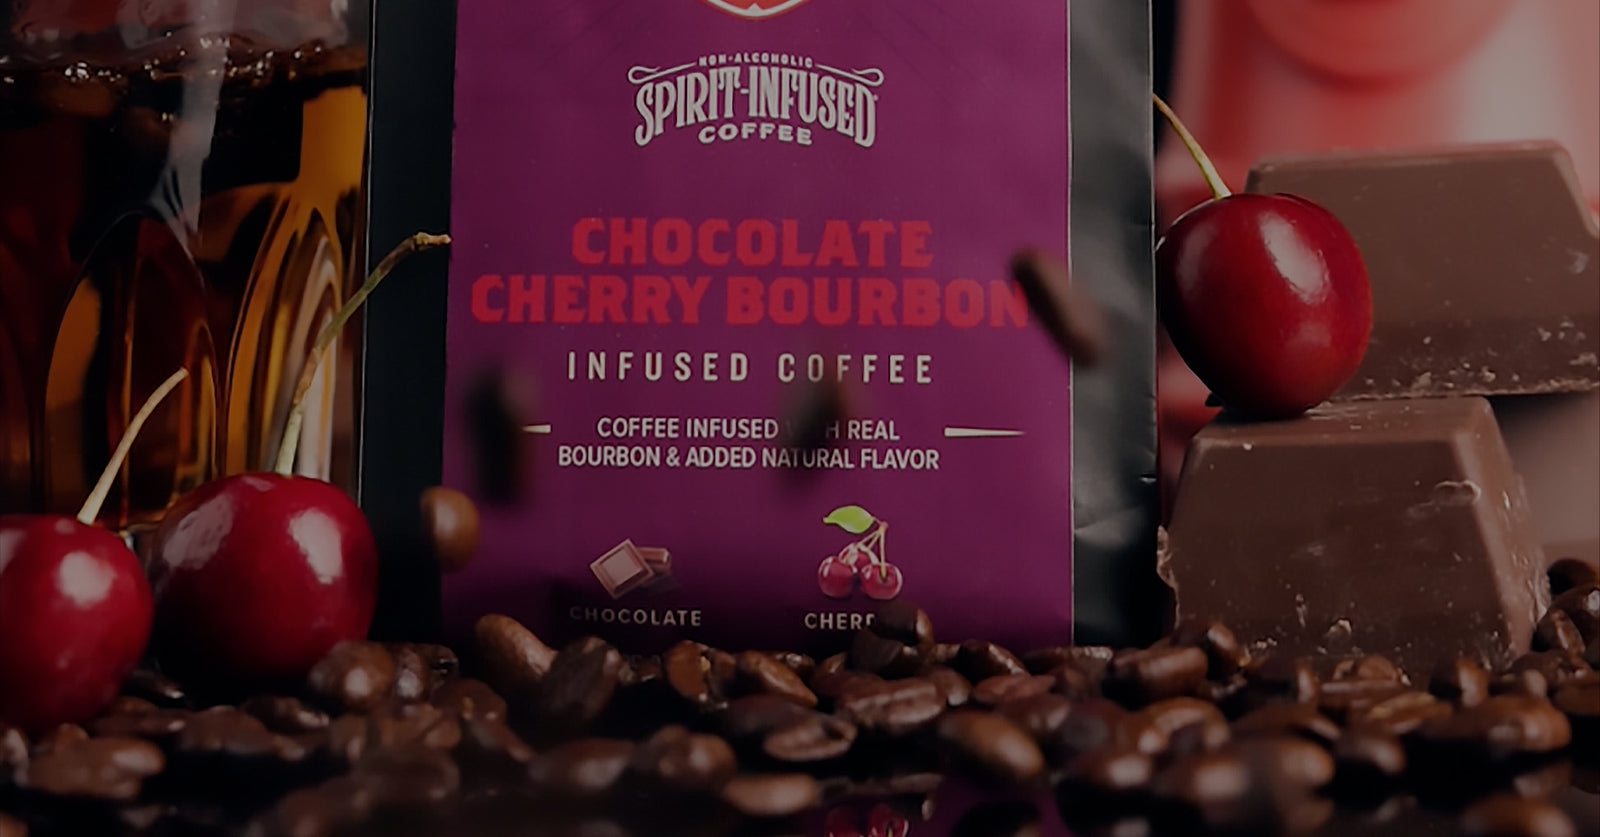 Chocolate Cherry Bourbon Infused Coffee - Spirit Infused Coffee Club.